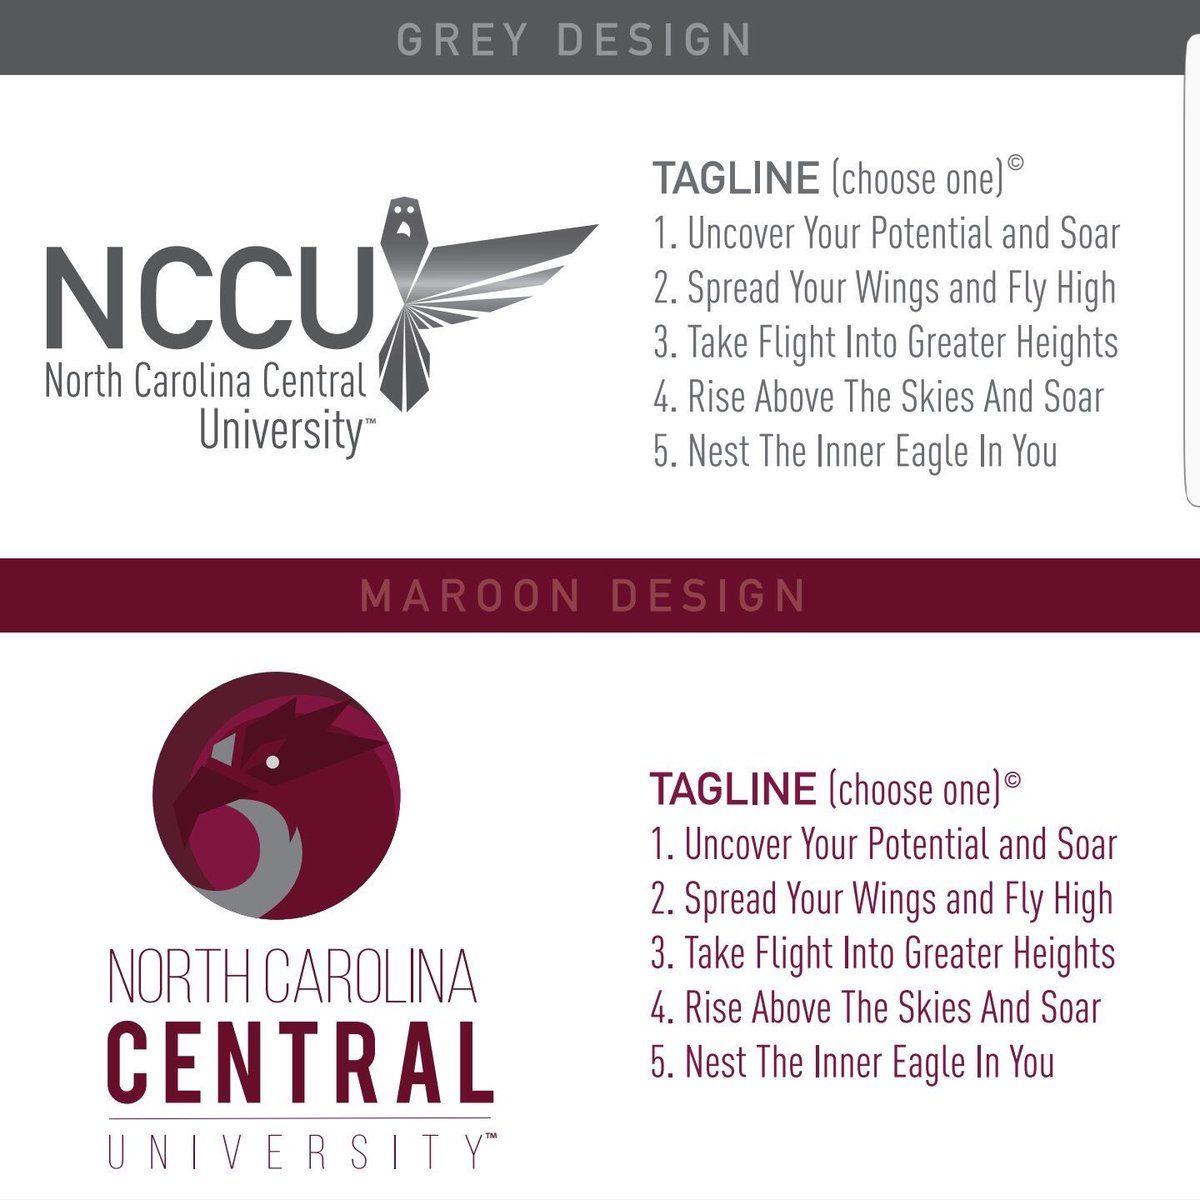 NCCU Logo - Rebranding has students and alumni clamoring for less change